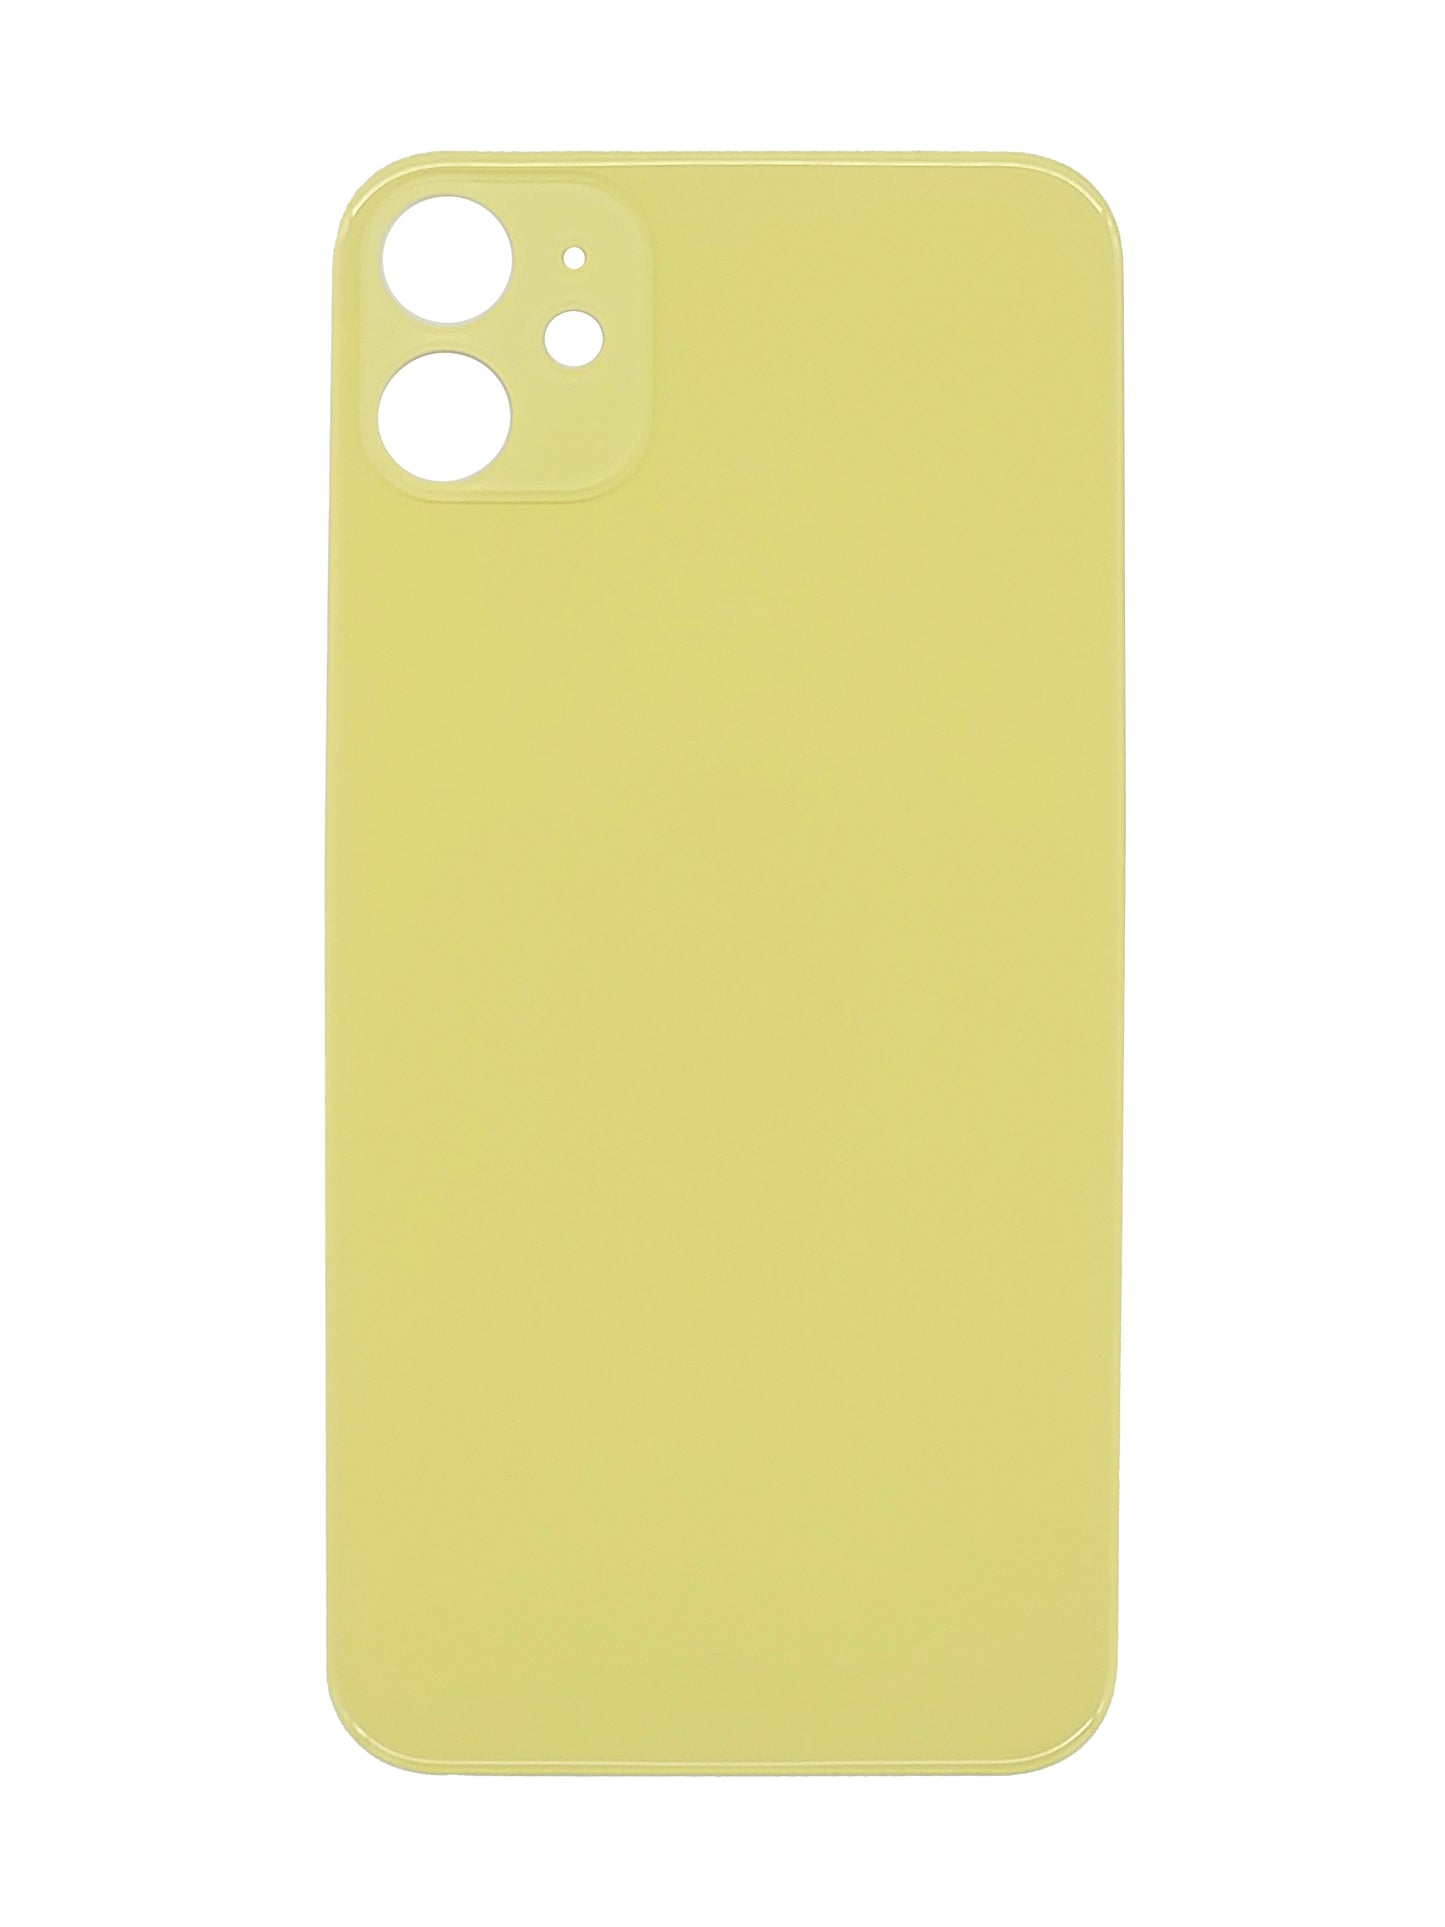 iPhone 11 Back Glass (No Logo) (Yellow)